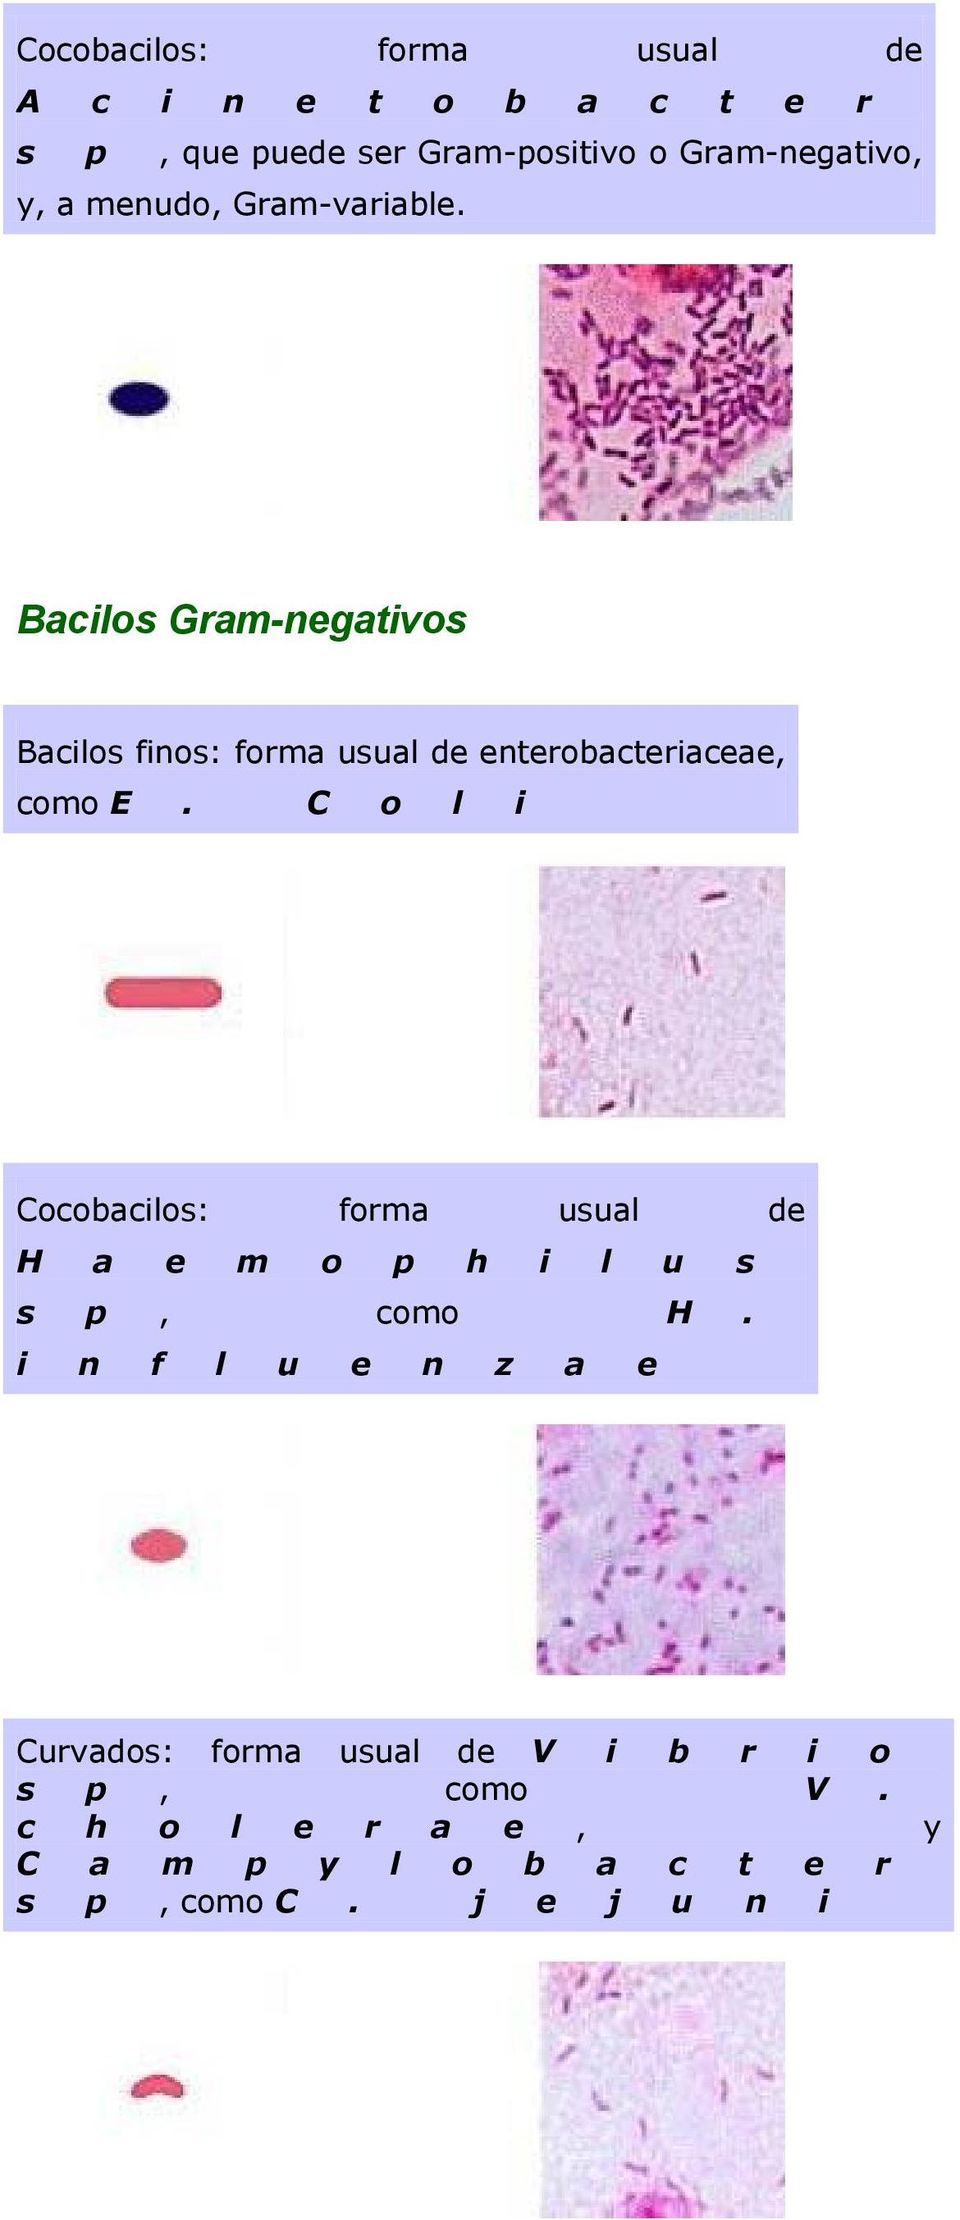 Bacilos Gram-negativos Bacilos finos: forma usual de enterobacteriaceae, como E.